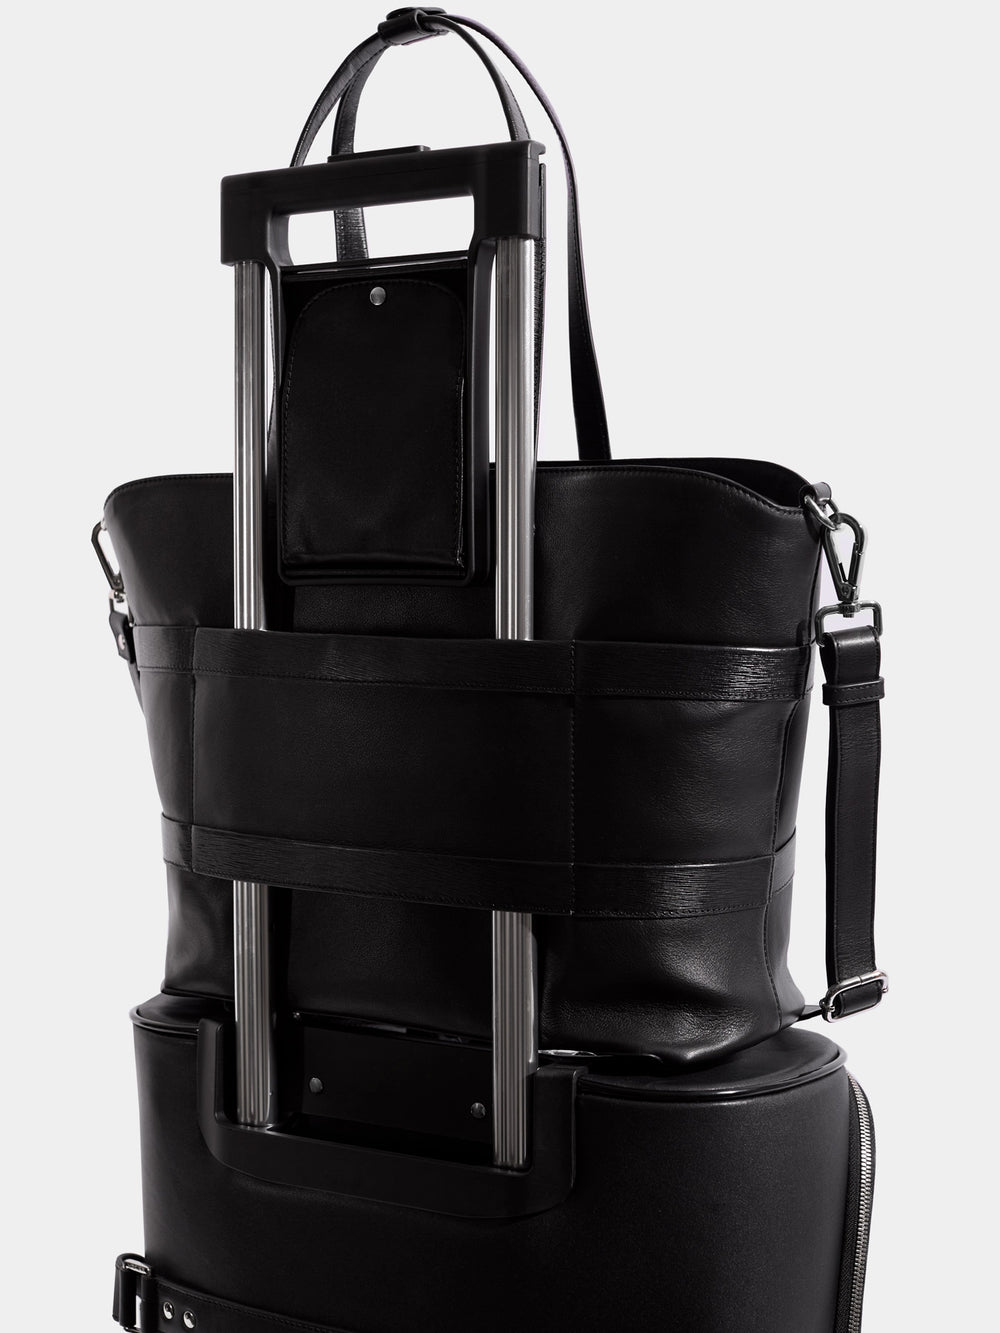 vantage tote bag on carry-on luggage travel set